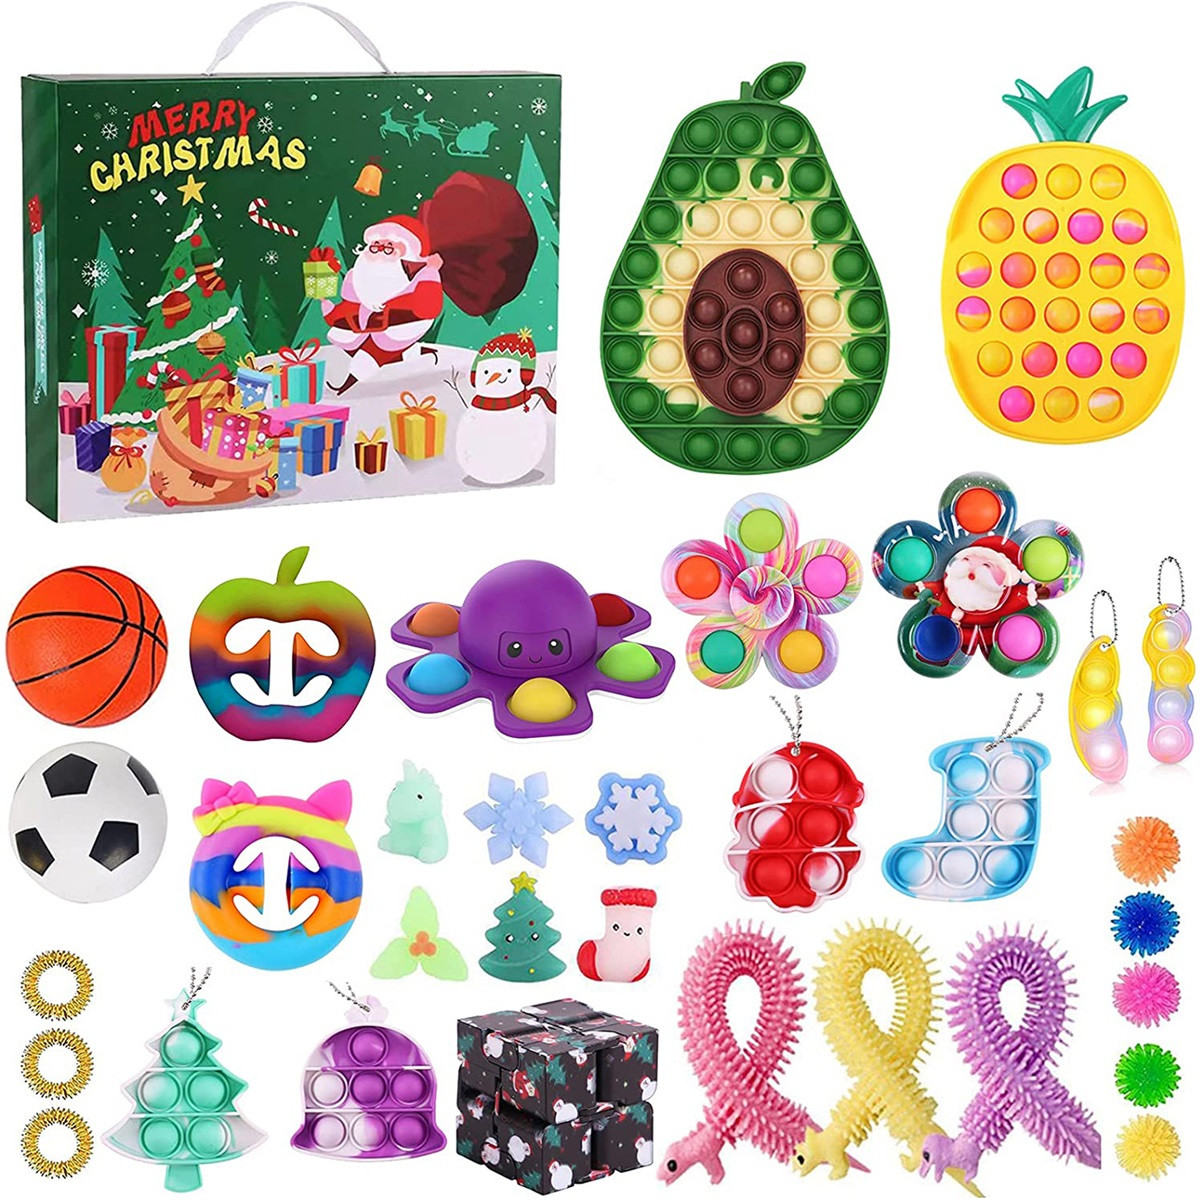 SLTS Toys Set Advent Calendar 2021 Christmas Countdown Calendar 25 Days It